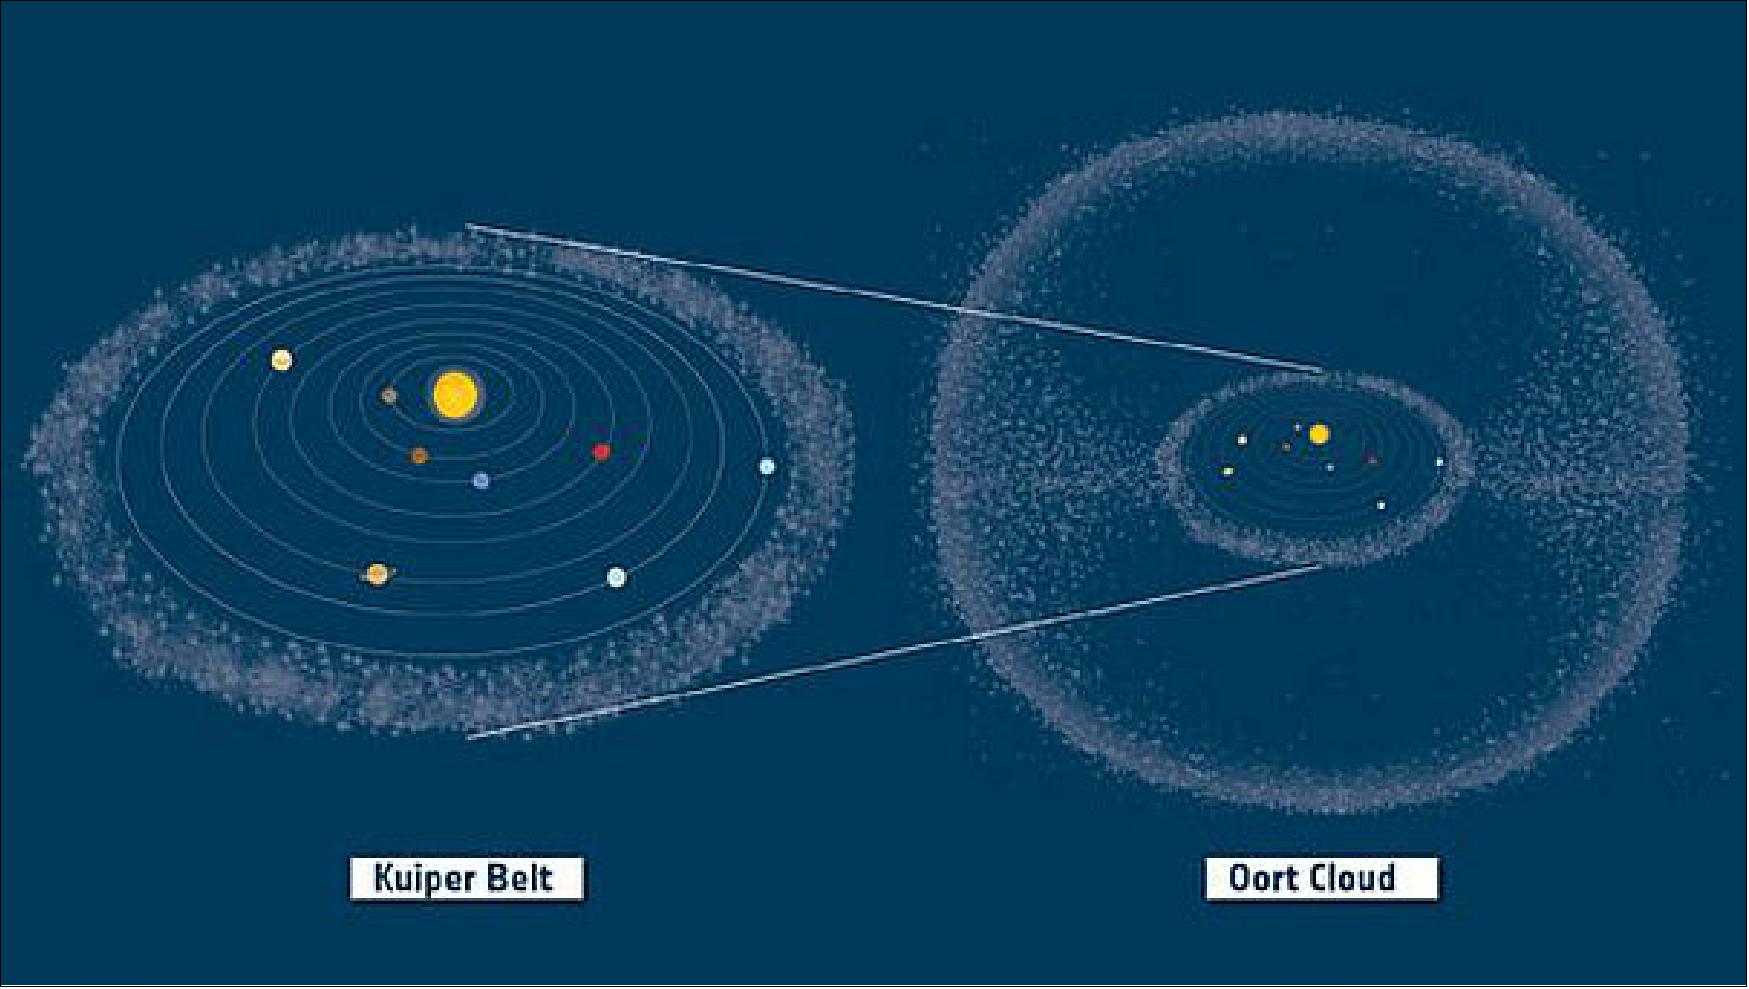 Figure 152: Kuiper Belt and Oort Cloud in context (image credit: ESA) 226)